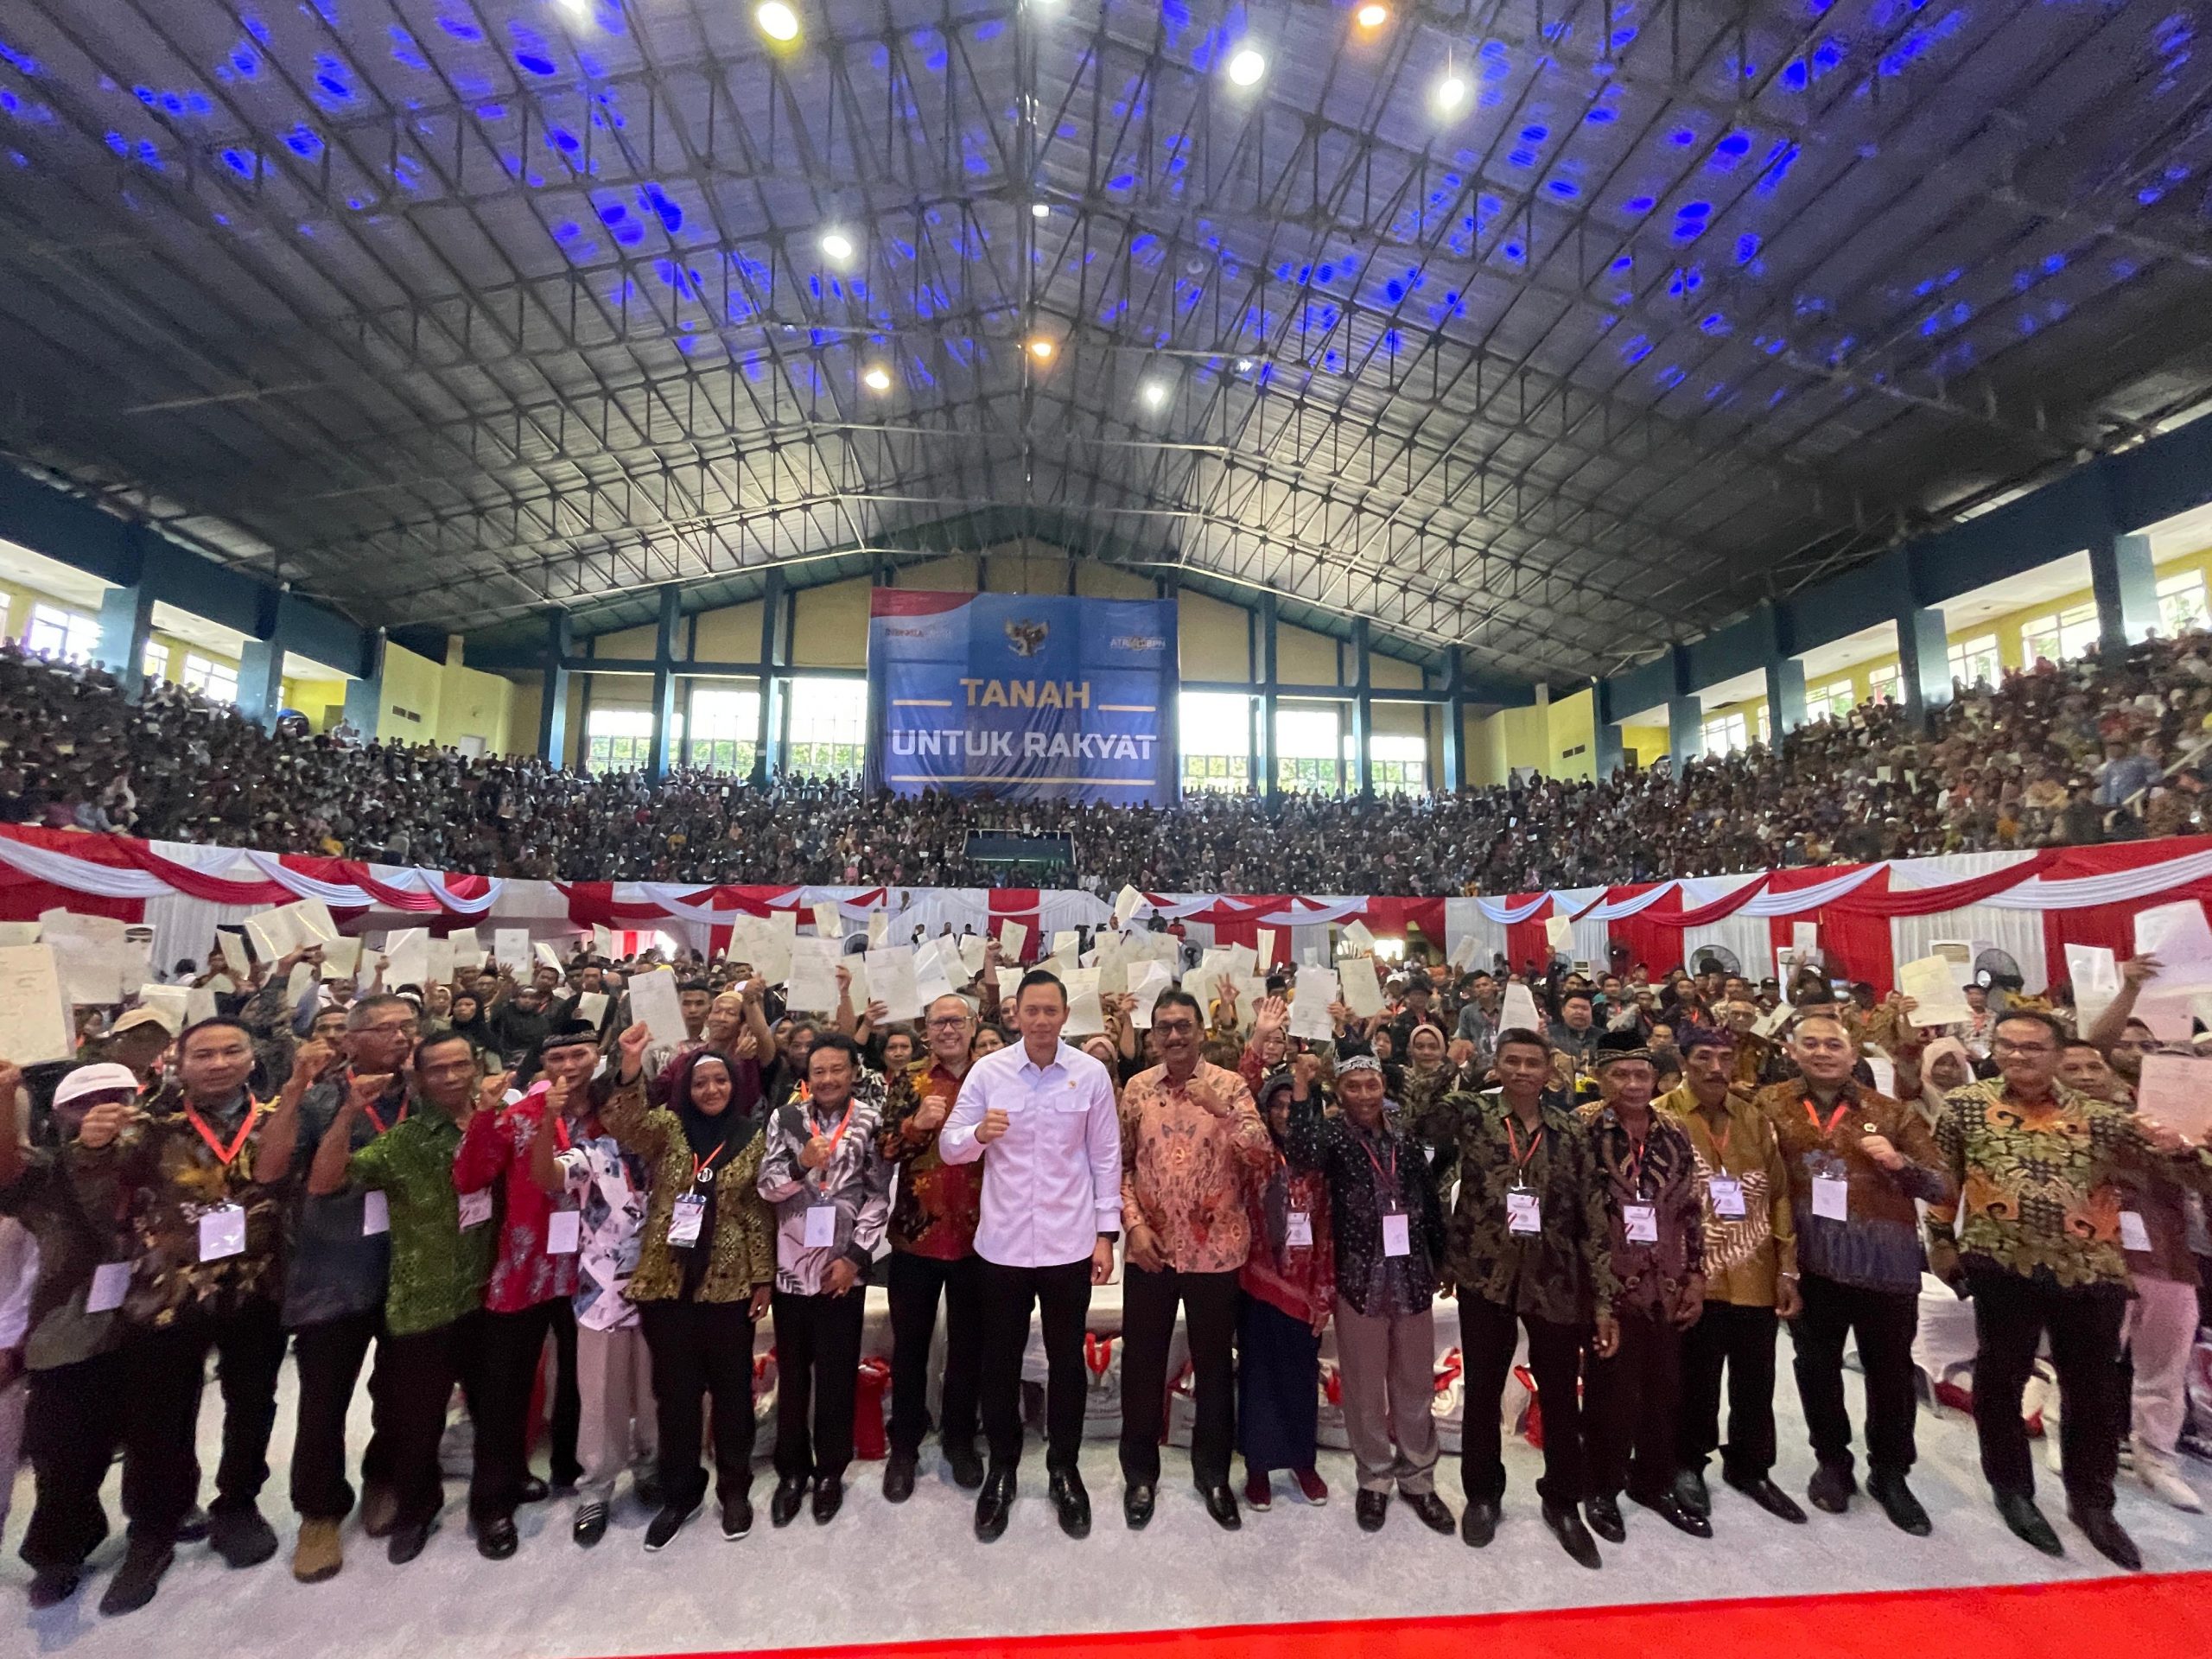 Laksanakan Perintah Presiden, Menteri AHY Sukseskan Sertipikat Tanah Elektronik Reforma Agraria